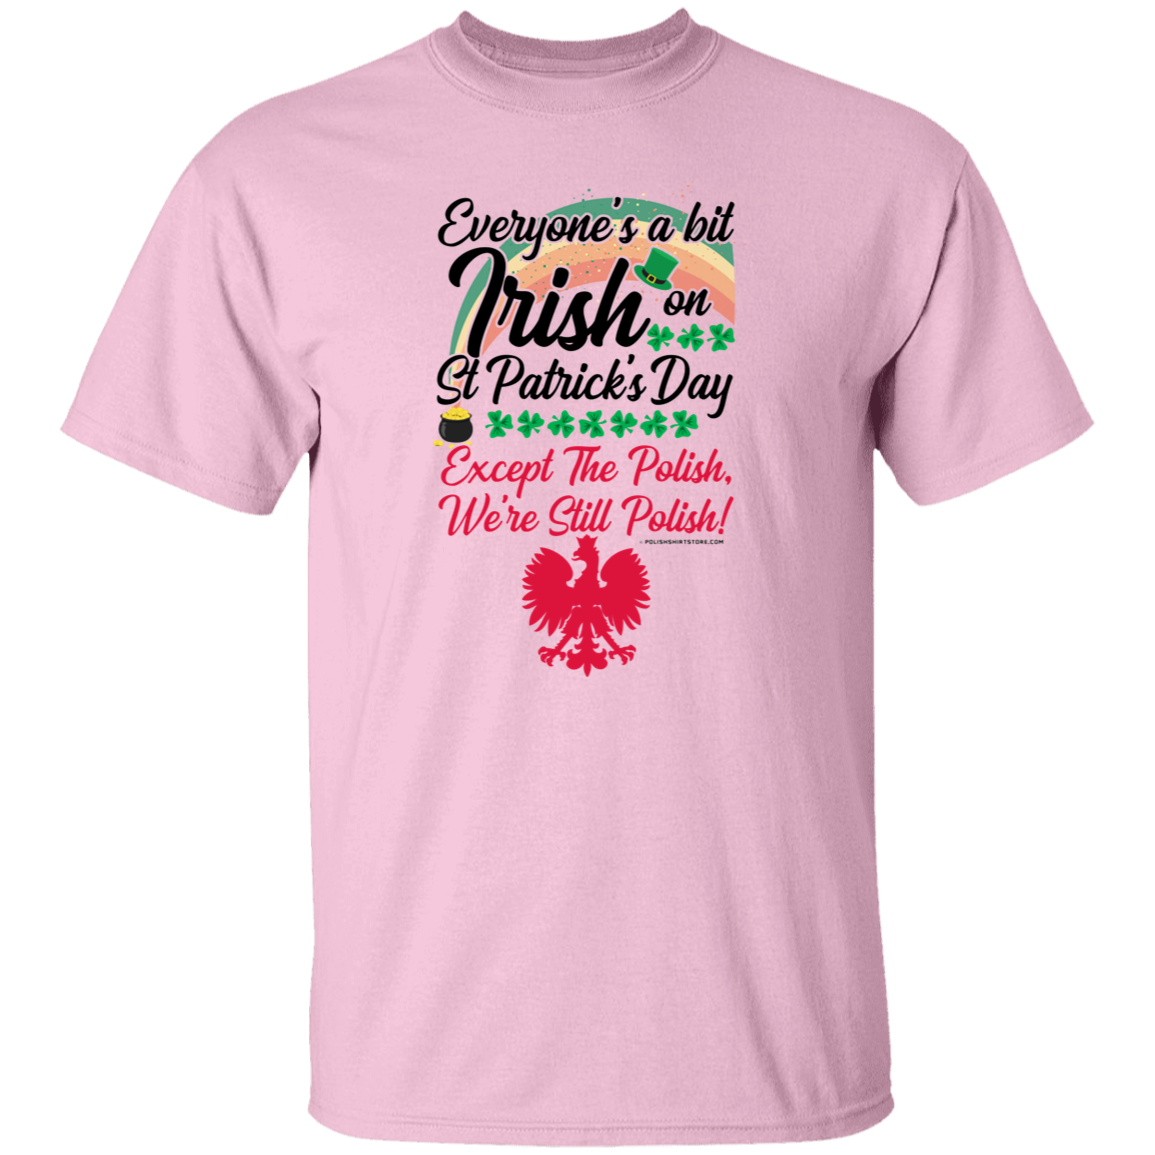 Everyone's Irish On St Patricks Day Except The Polish  – We're Still Polish Apparel CustomCat G500 5.3 oz. T-Shirt Light Pink S